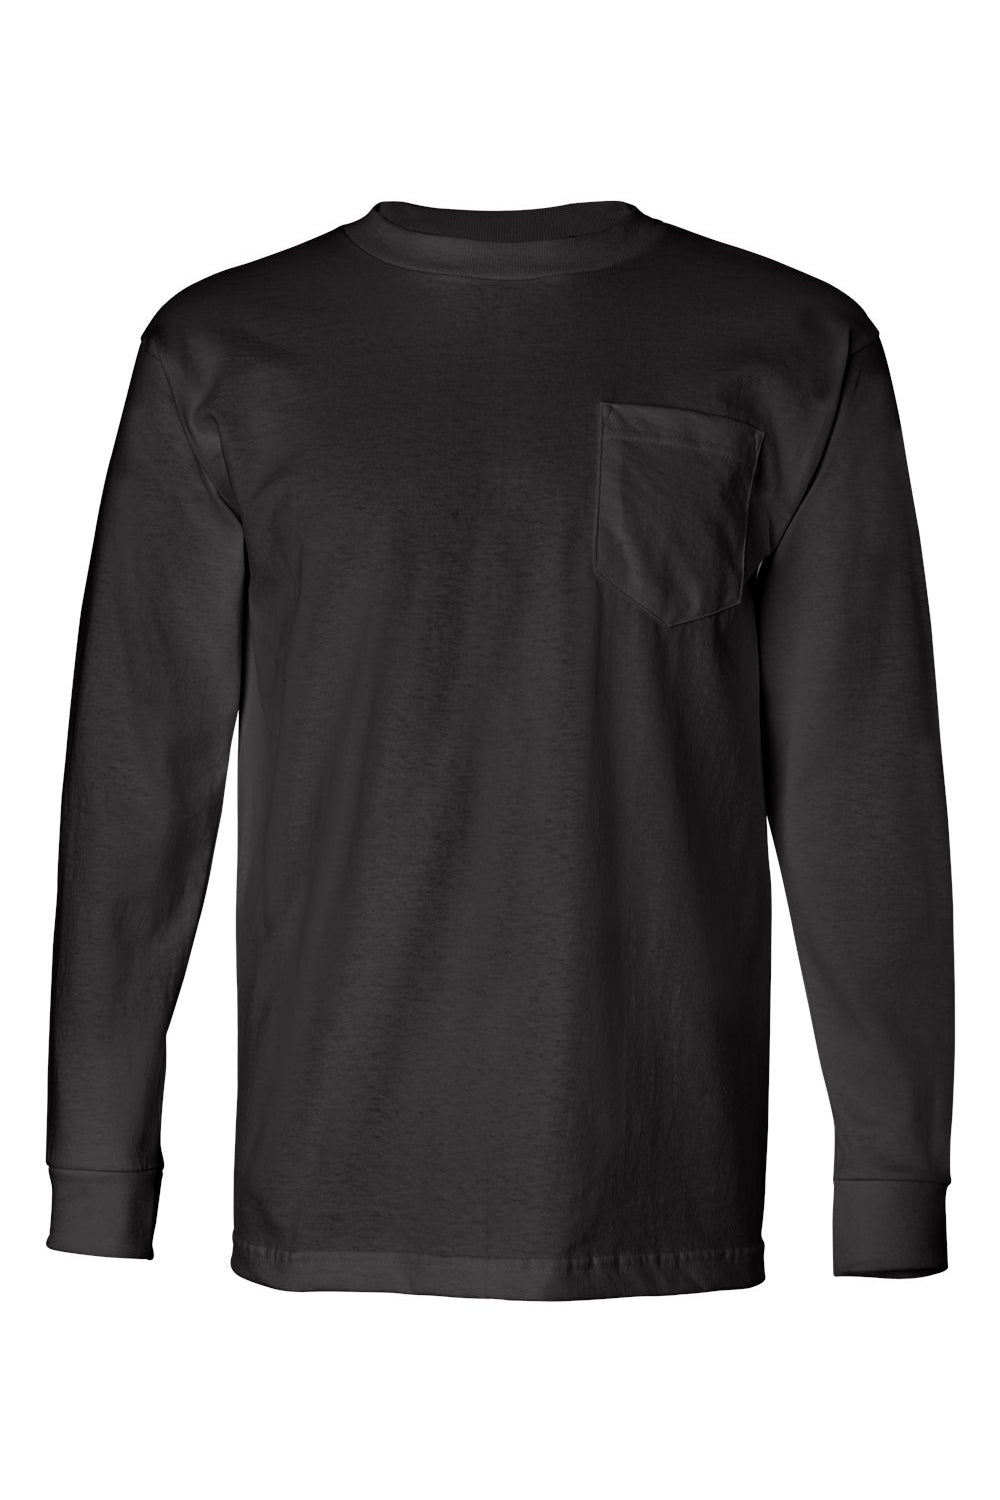 Bayside BA8100 Mens USA Made Long Sleeve Crewneck T-Shirt w/ Pocket Black Flat Front